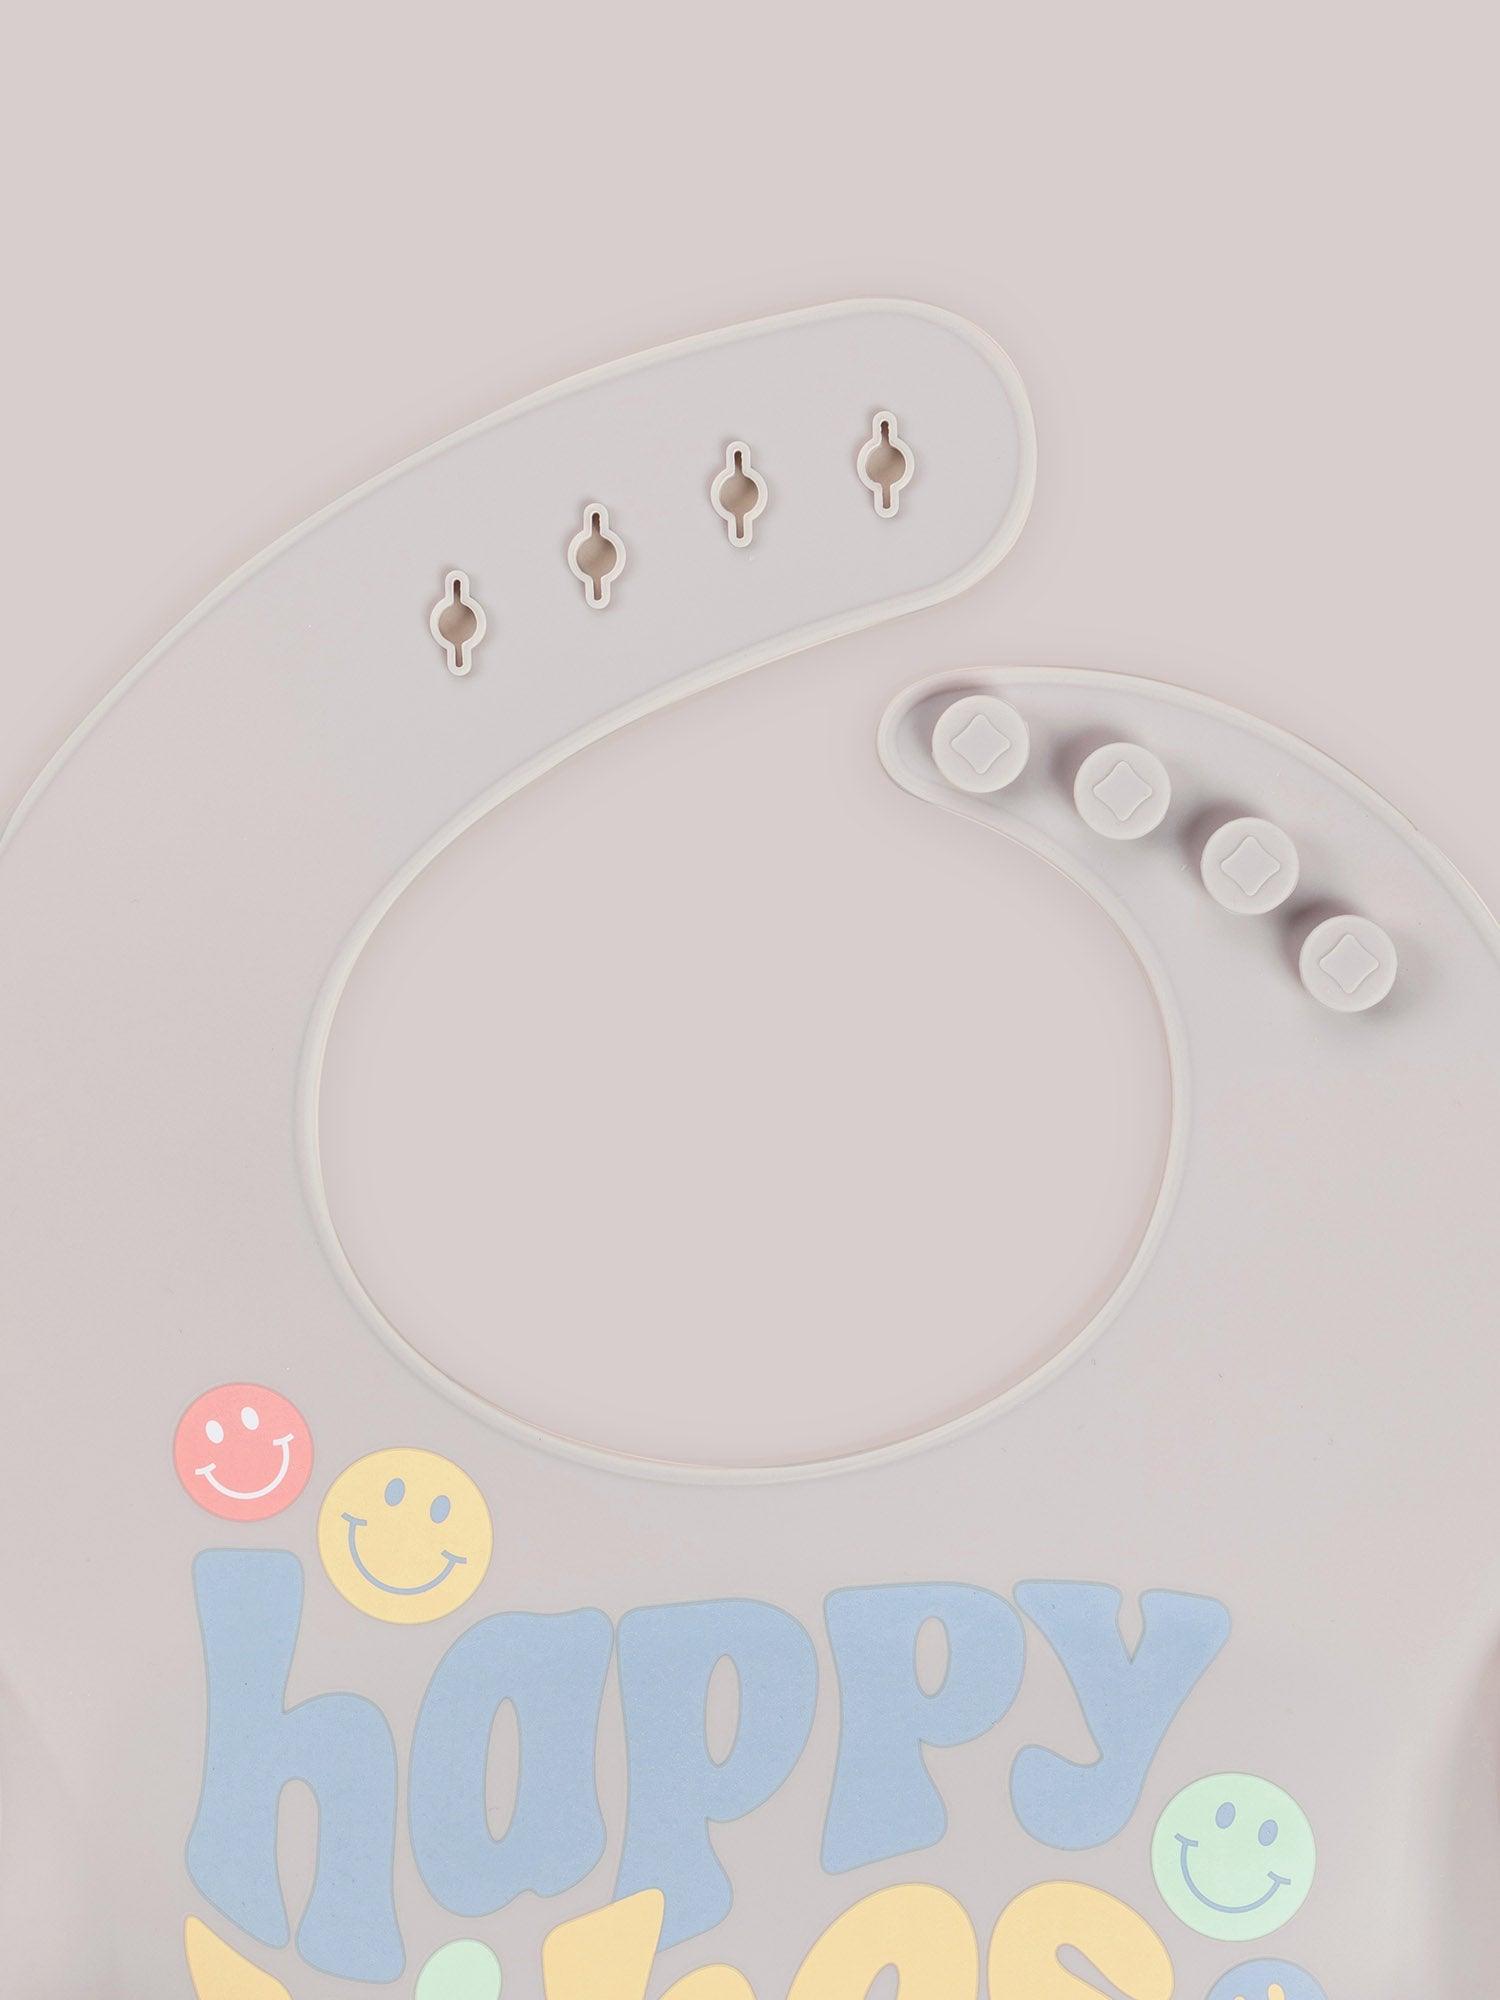 Silicone Bib - Happy Baby Vibes